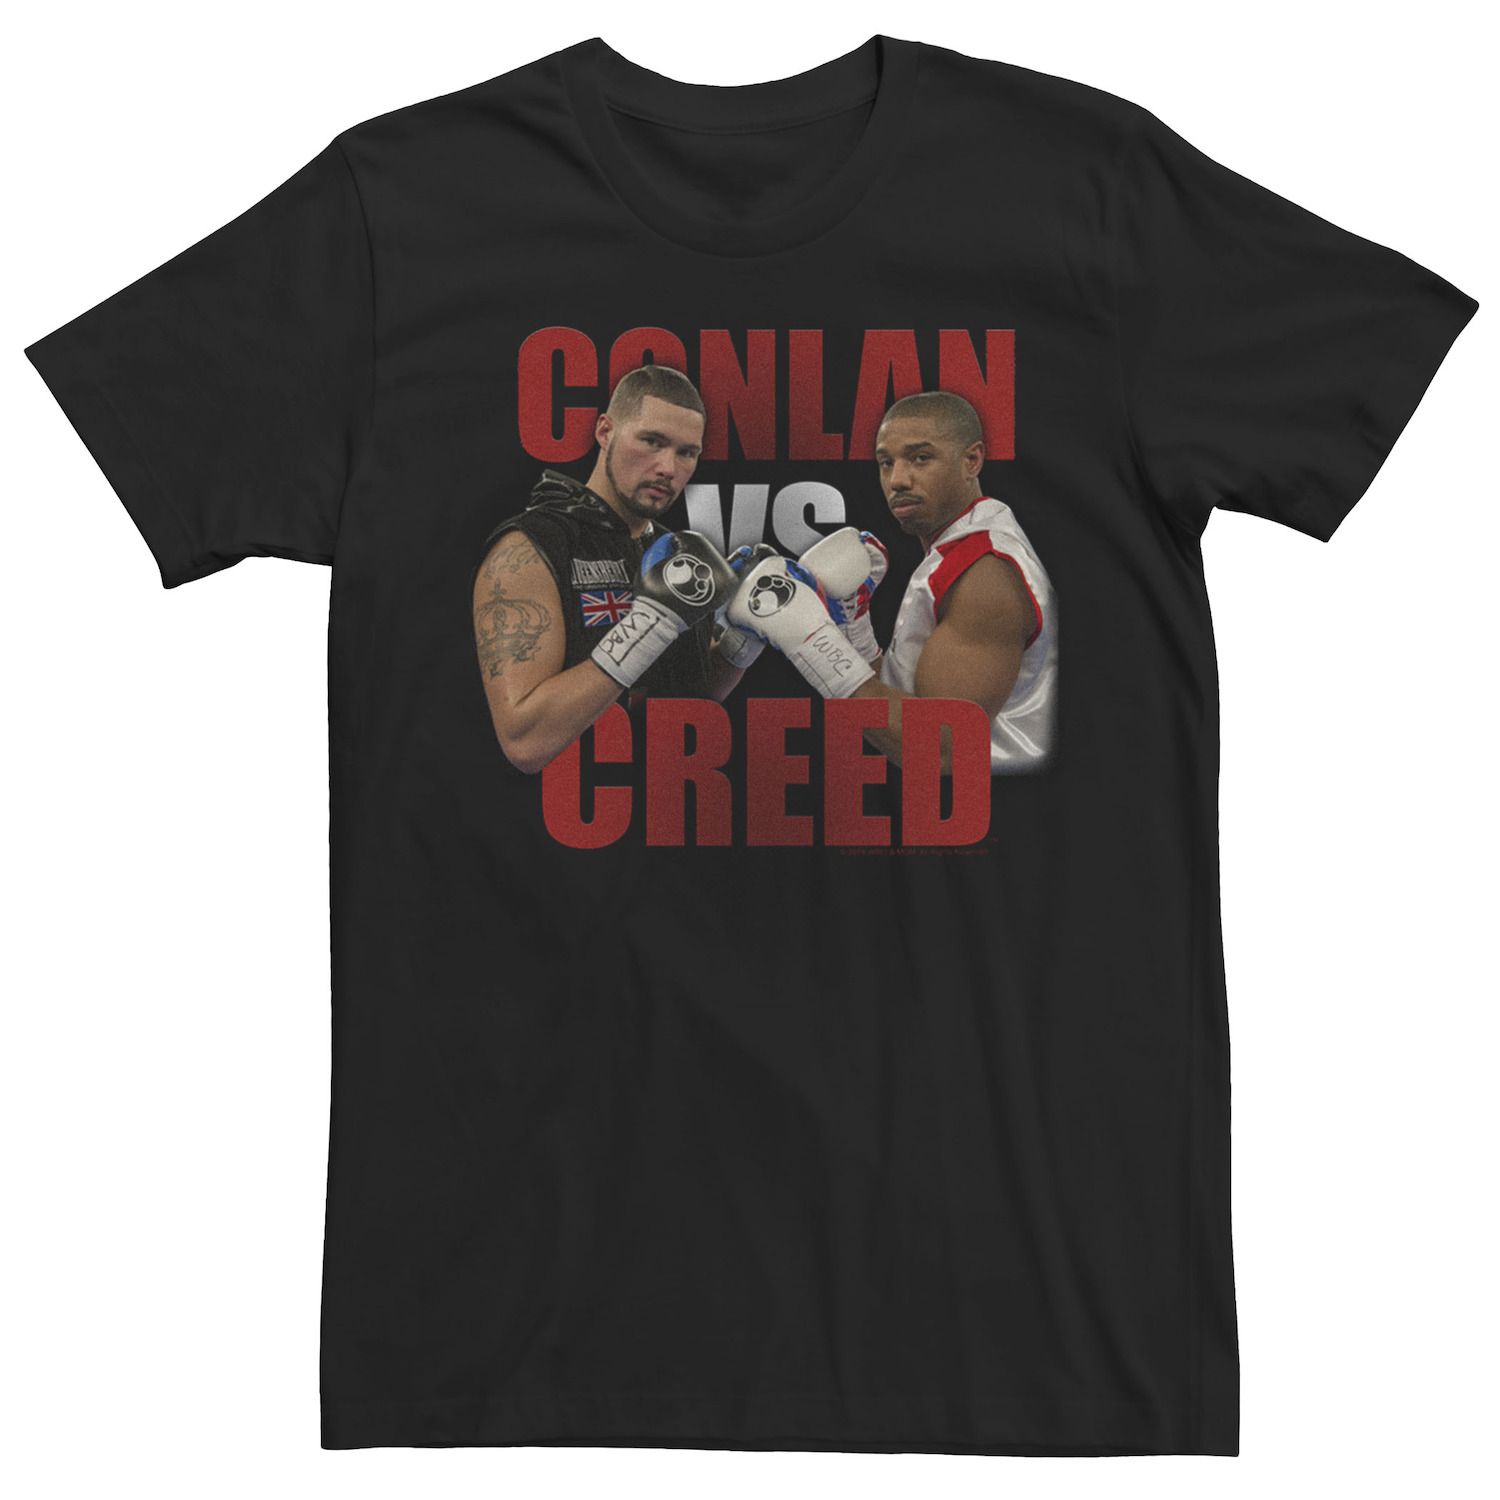 Мужская футболка Creed (One) Conlan Vs Creed с рисунком Licensed Character